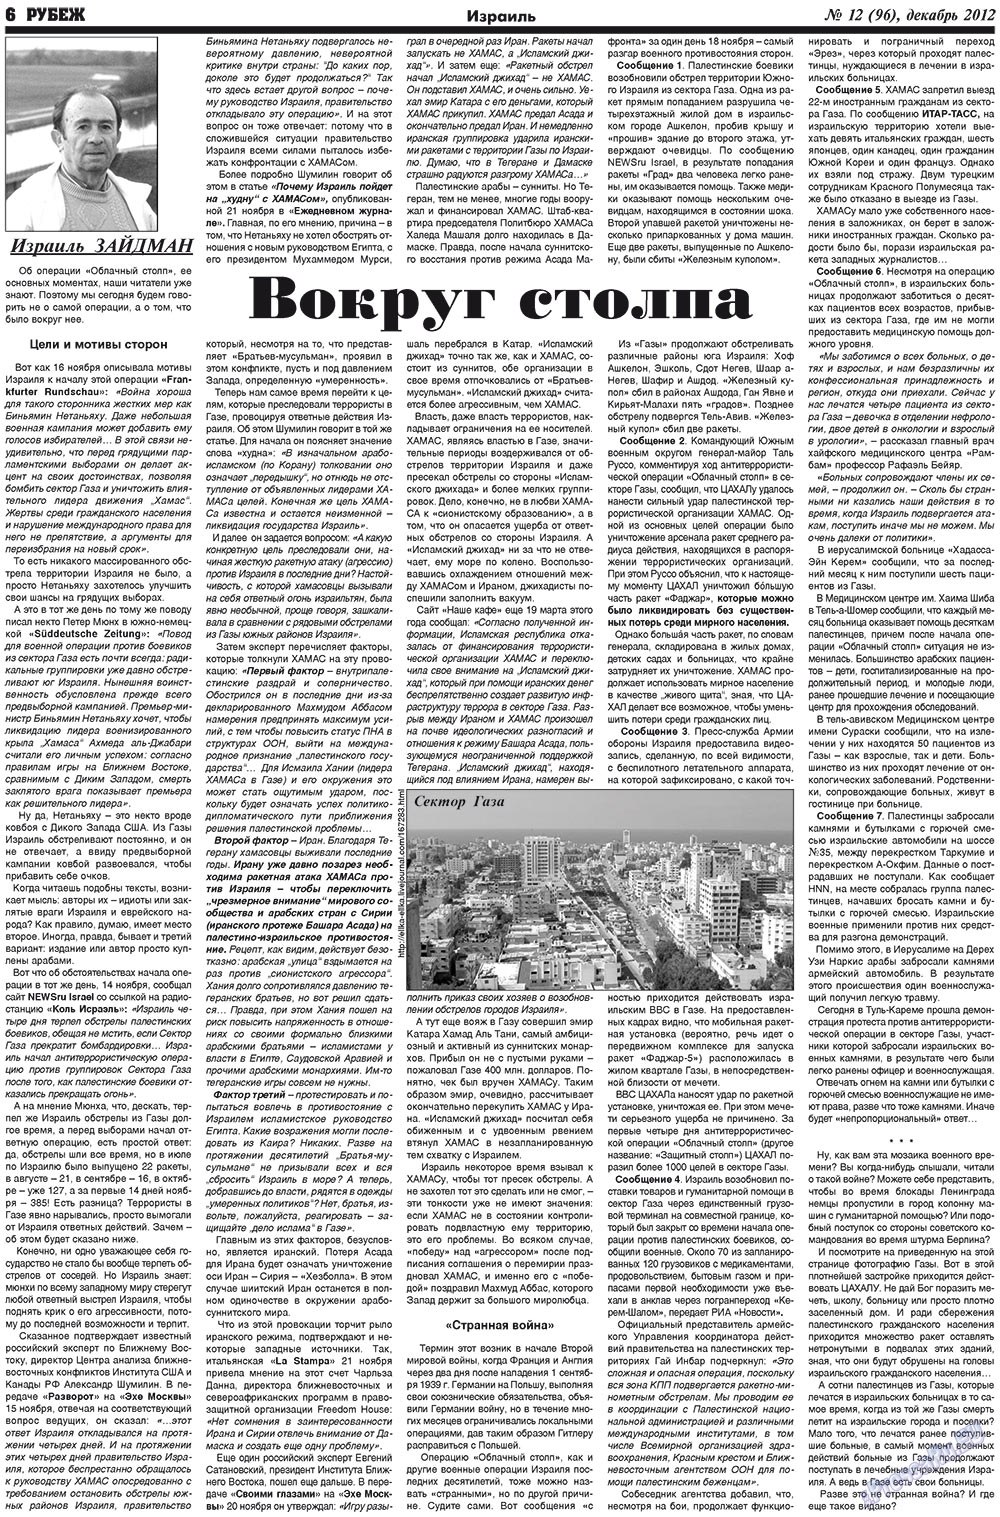 Рубеж, газета. 2012 №12 стр.6